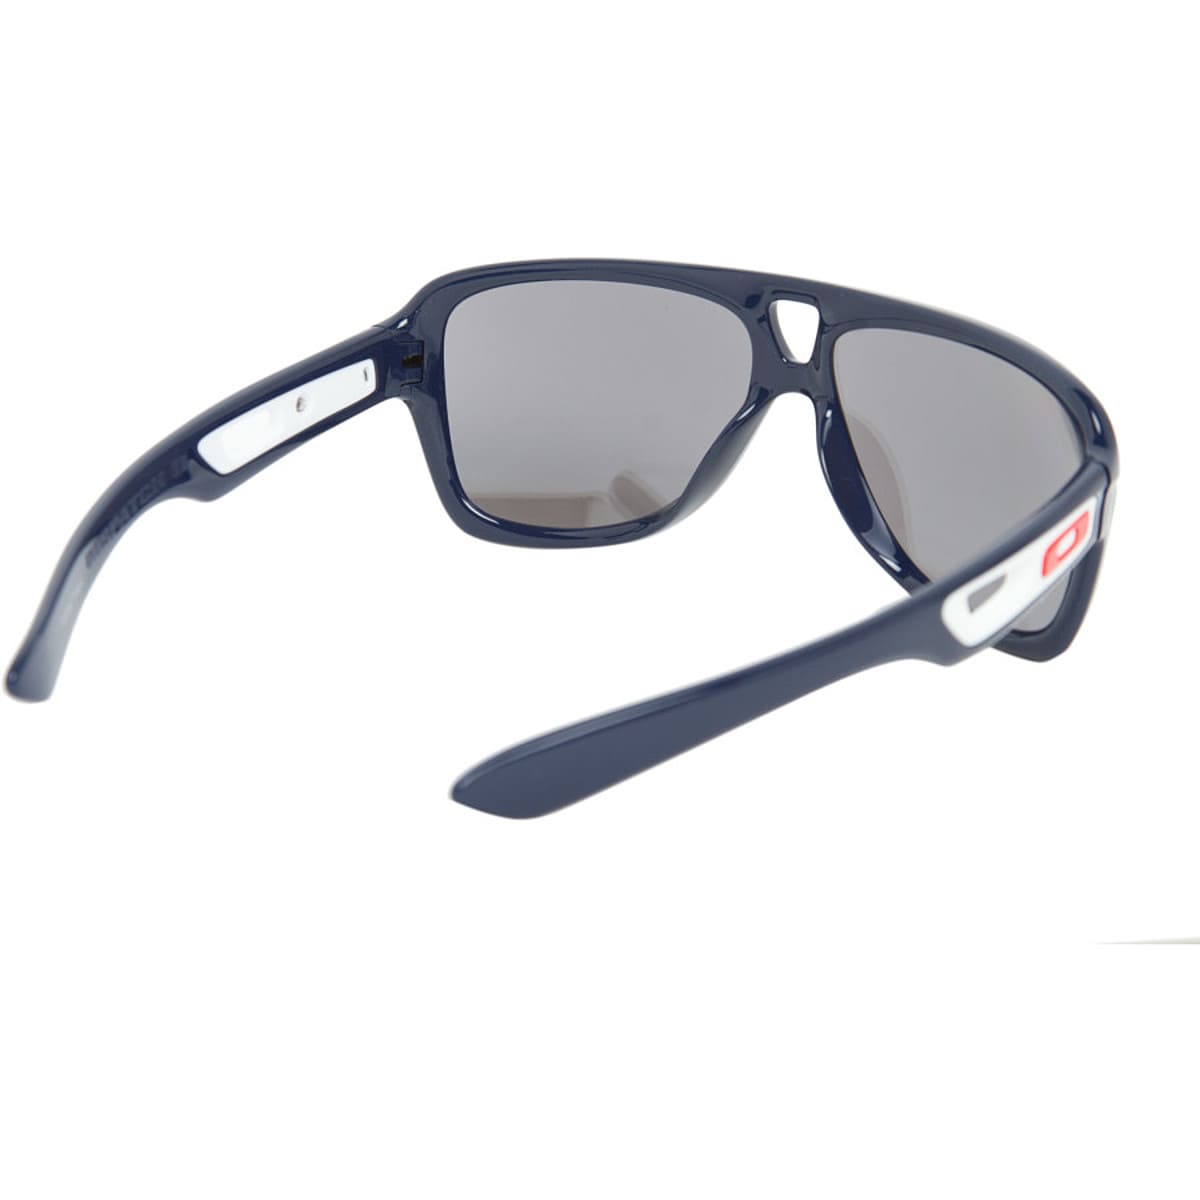 Oakley Dispatch II Sunglasses - Accessories